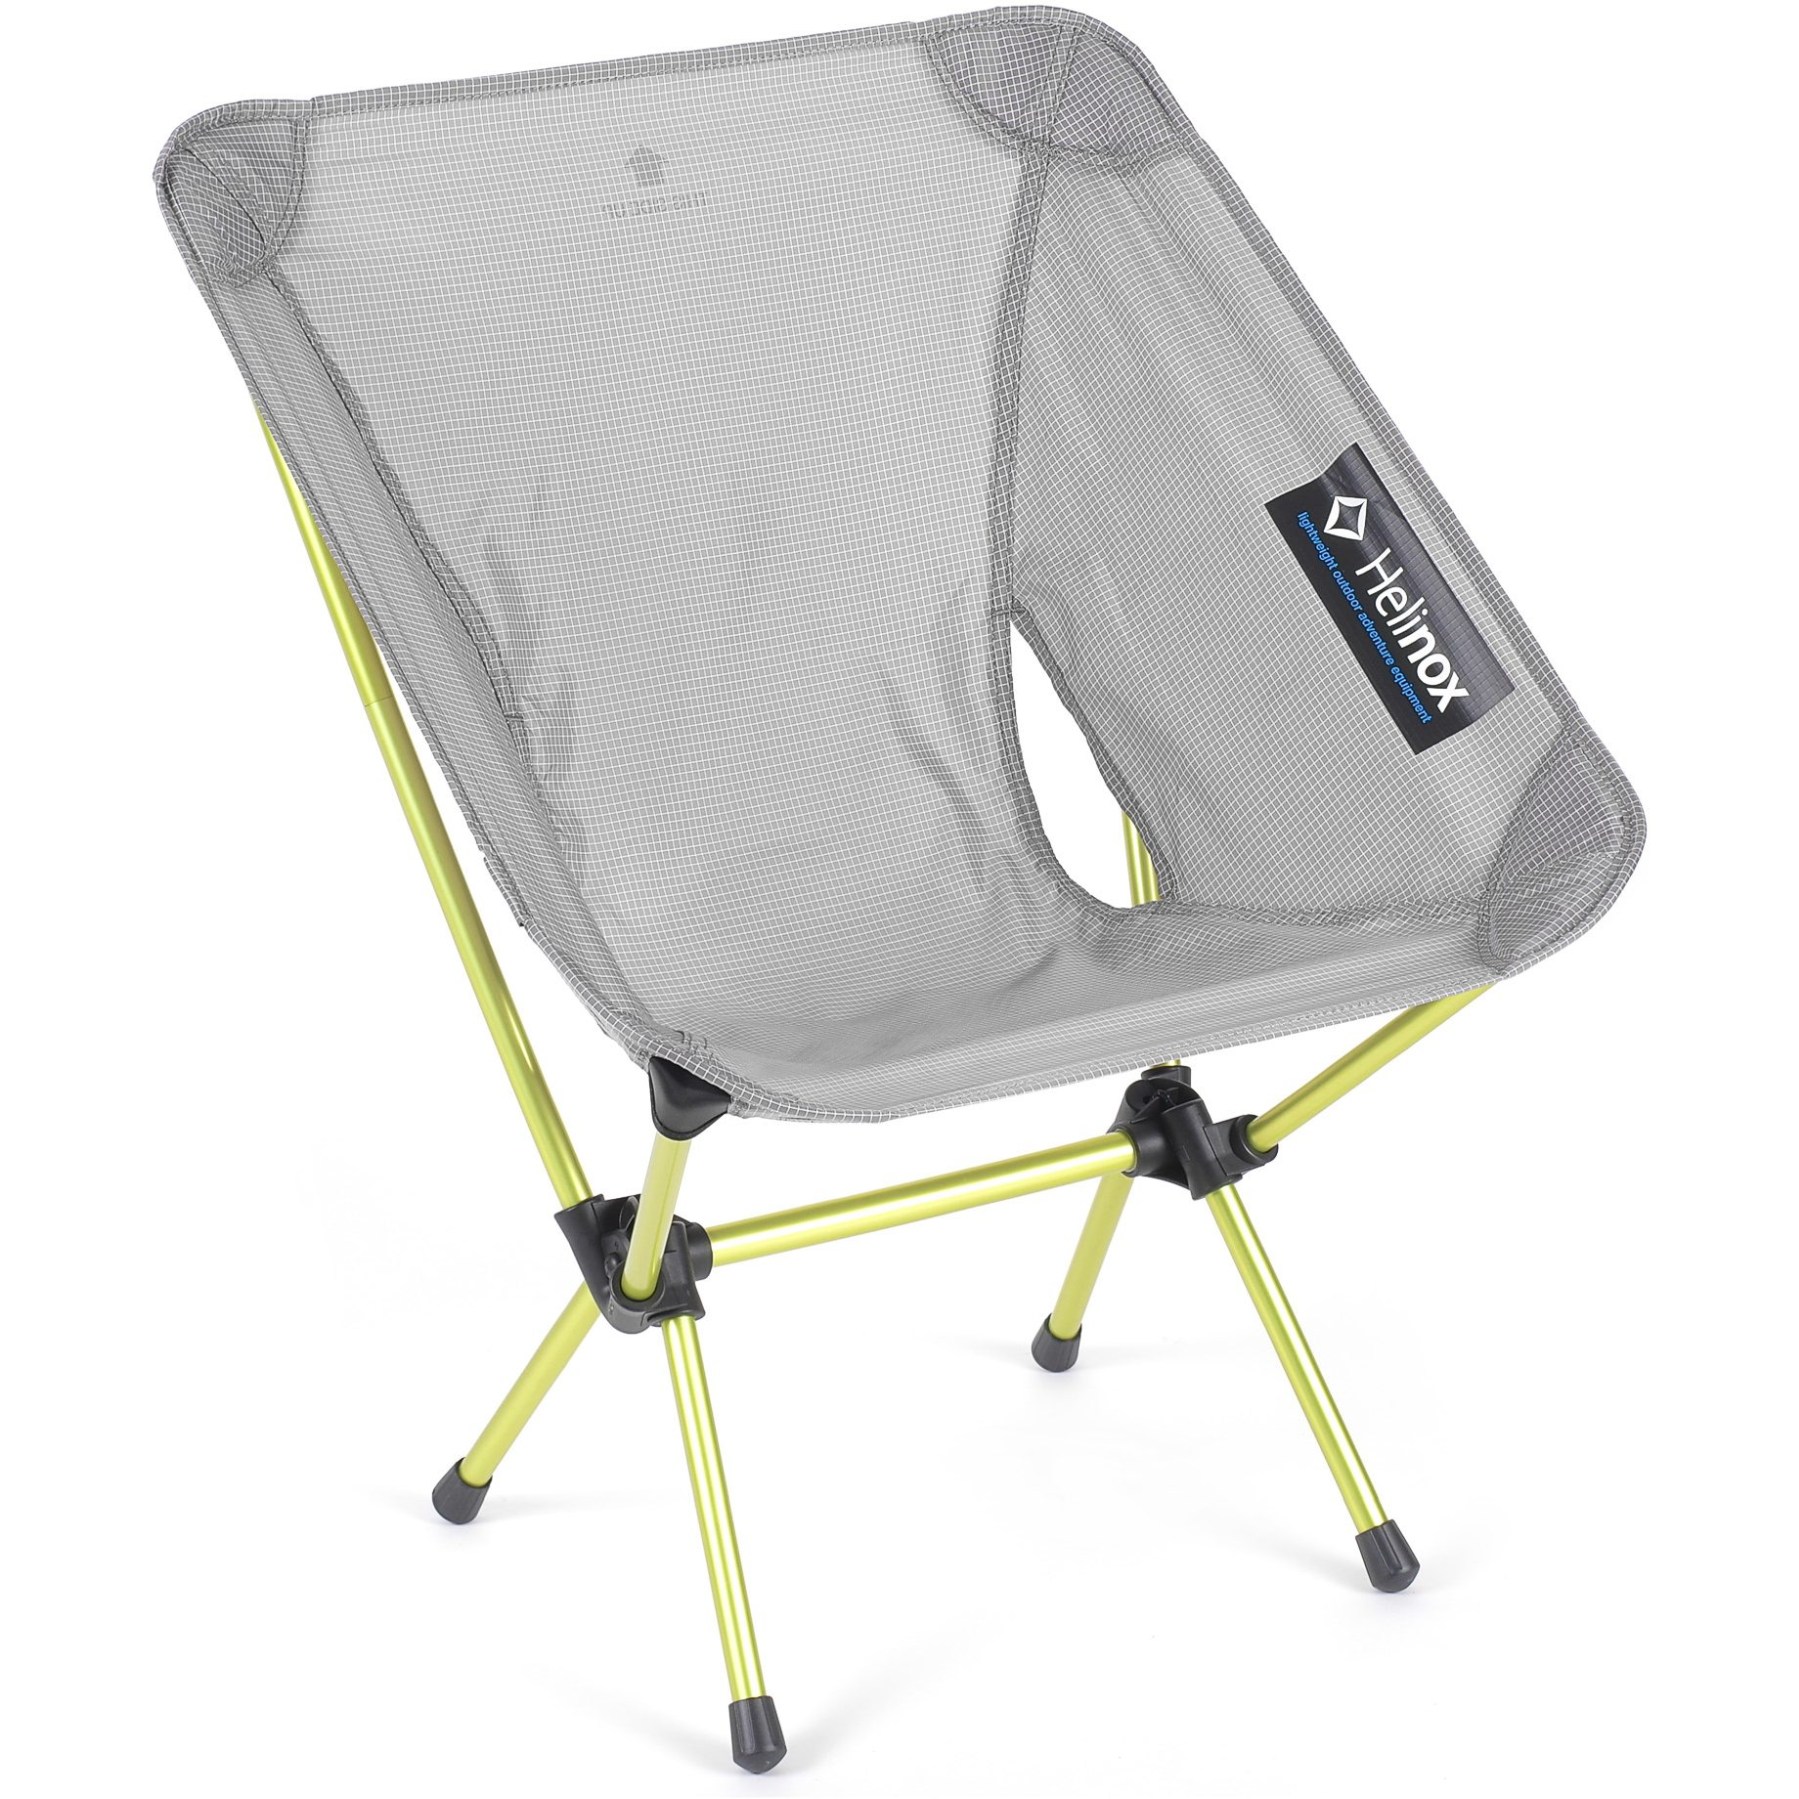 Produktbild von Helinox Chair Zero L - Campingstuhl - Grau / Melon